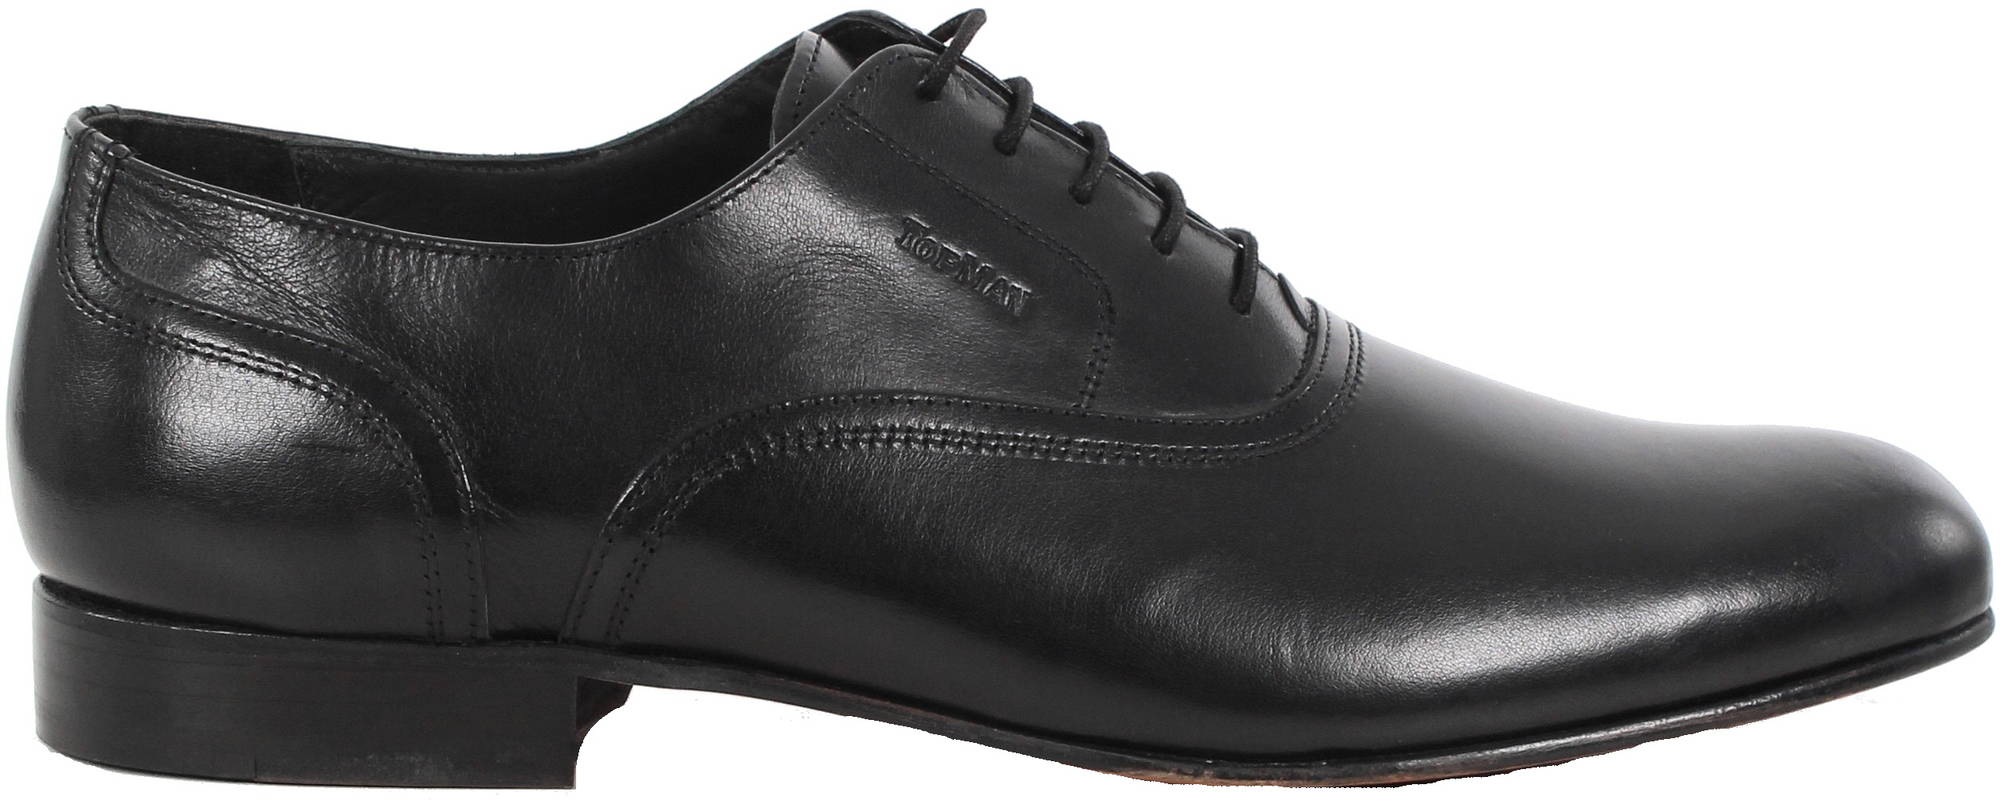 TopMan Shoes 14091 black - Stilettoshop.eu webstore